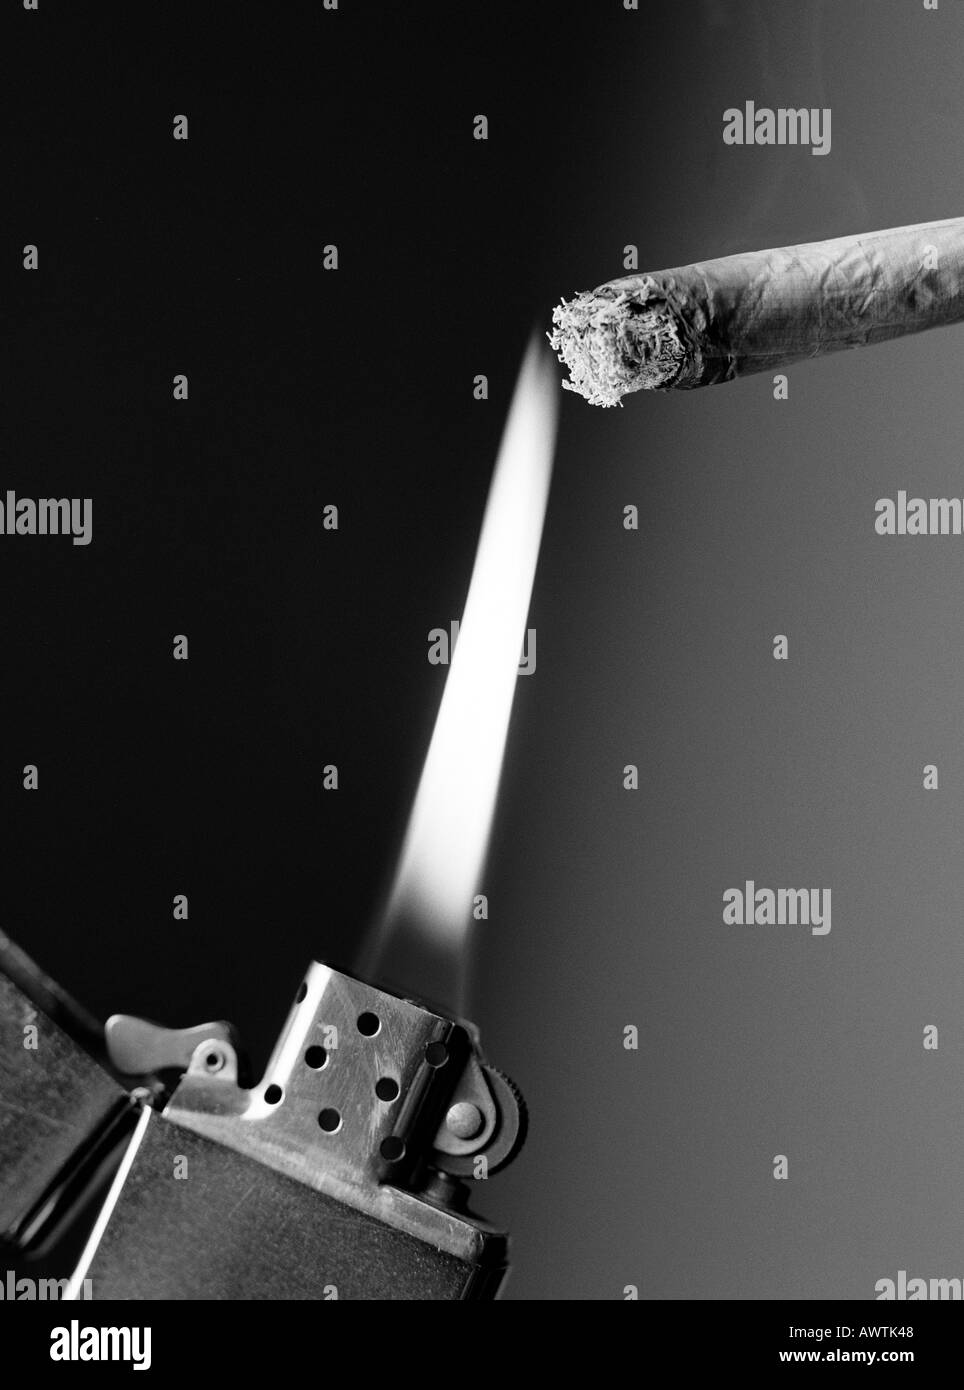 Lighter lighting cigarette, close-up Stock Photo